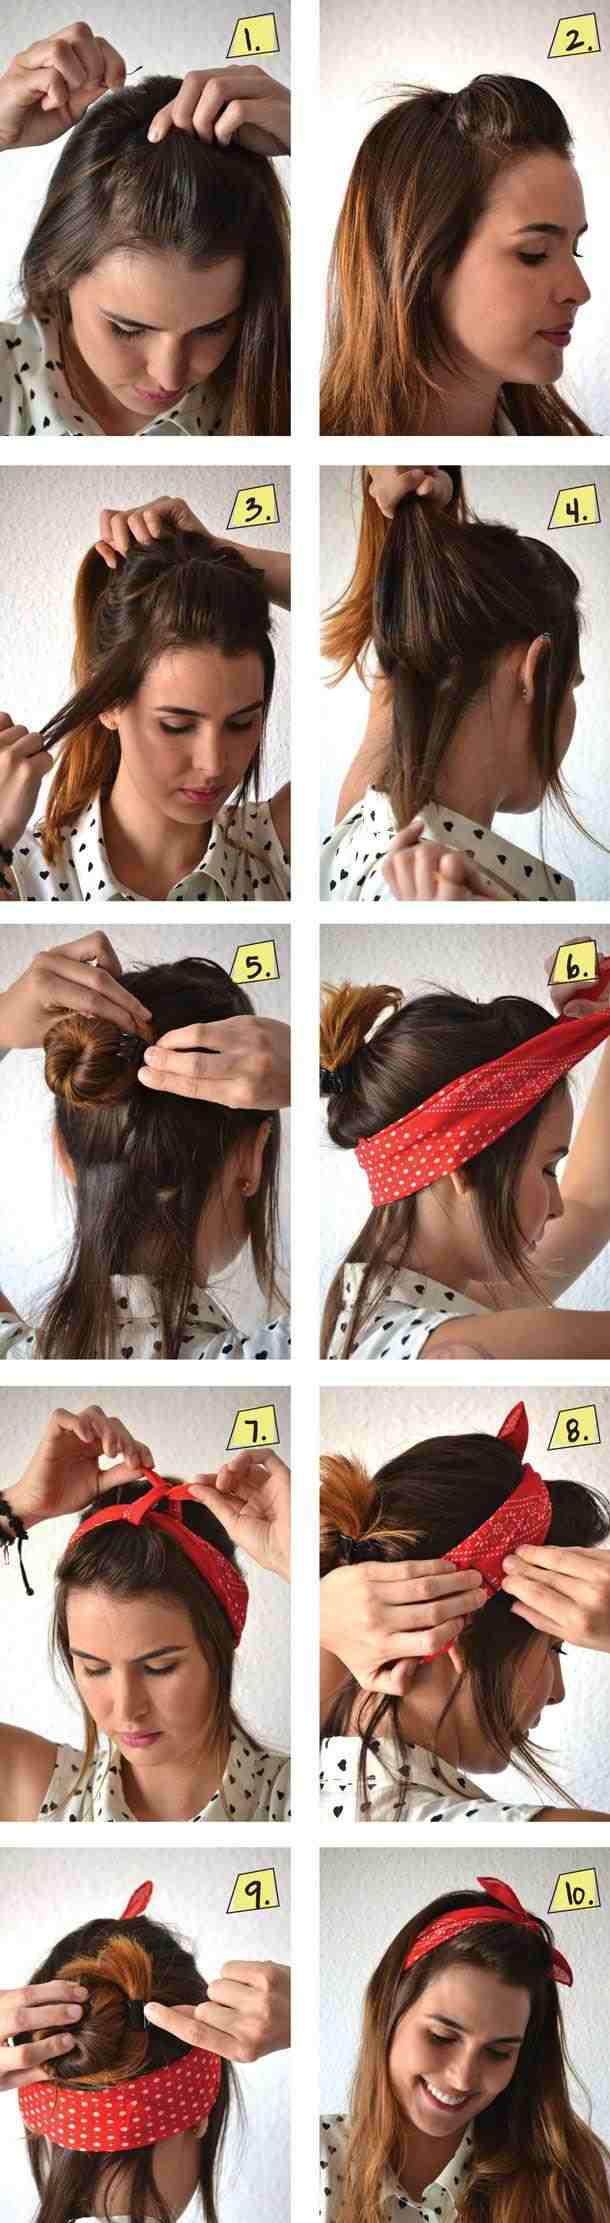 bandana tie-instructions-open-hair